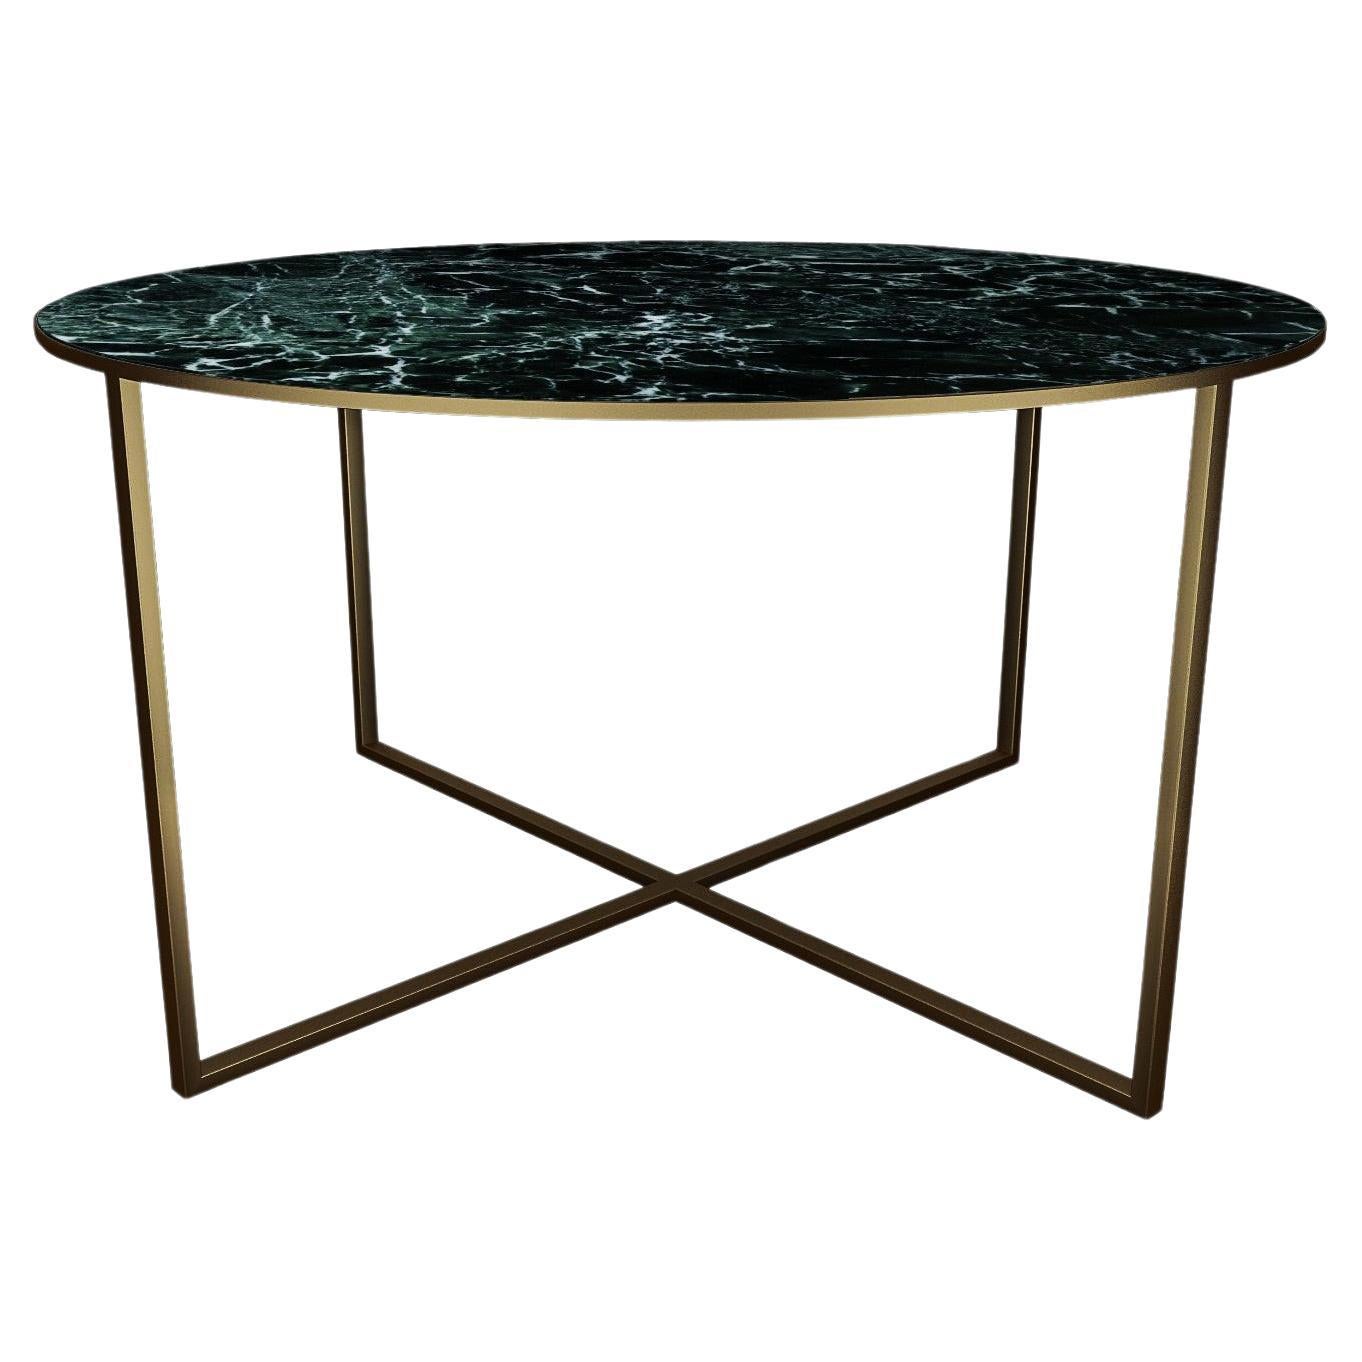 NORDST MIA Dining Table, Italian Green Lightning Marble, Danish Modern Design